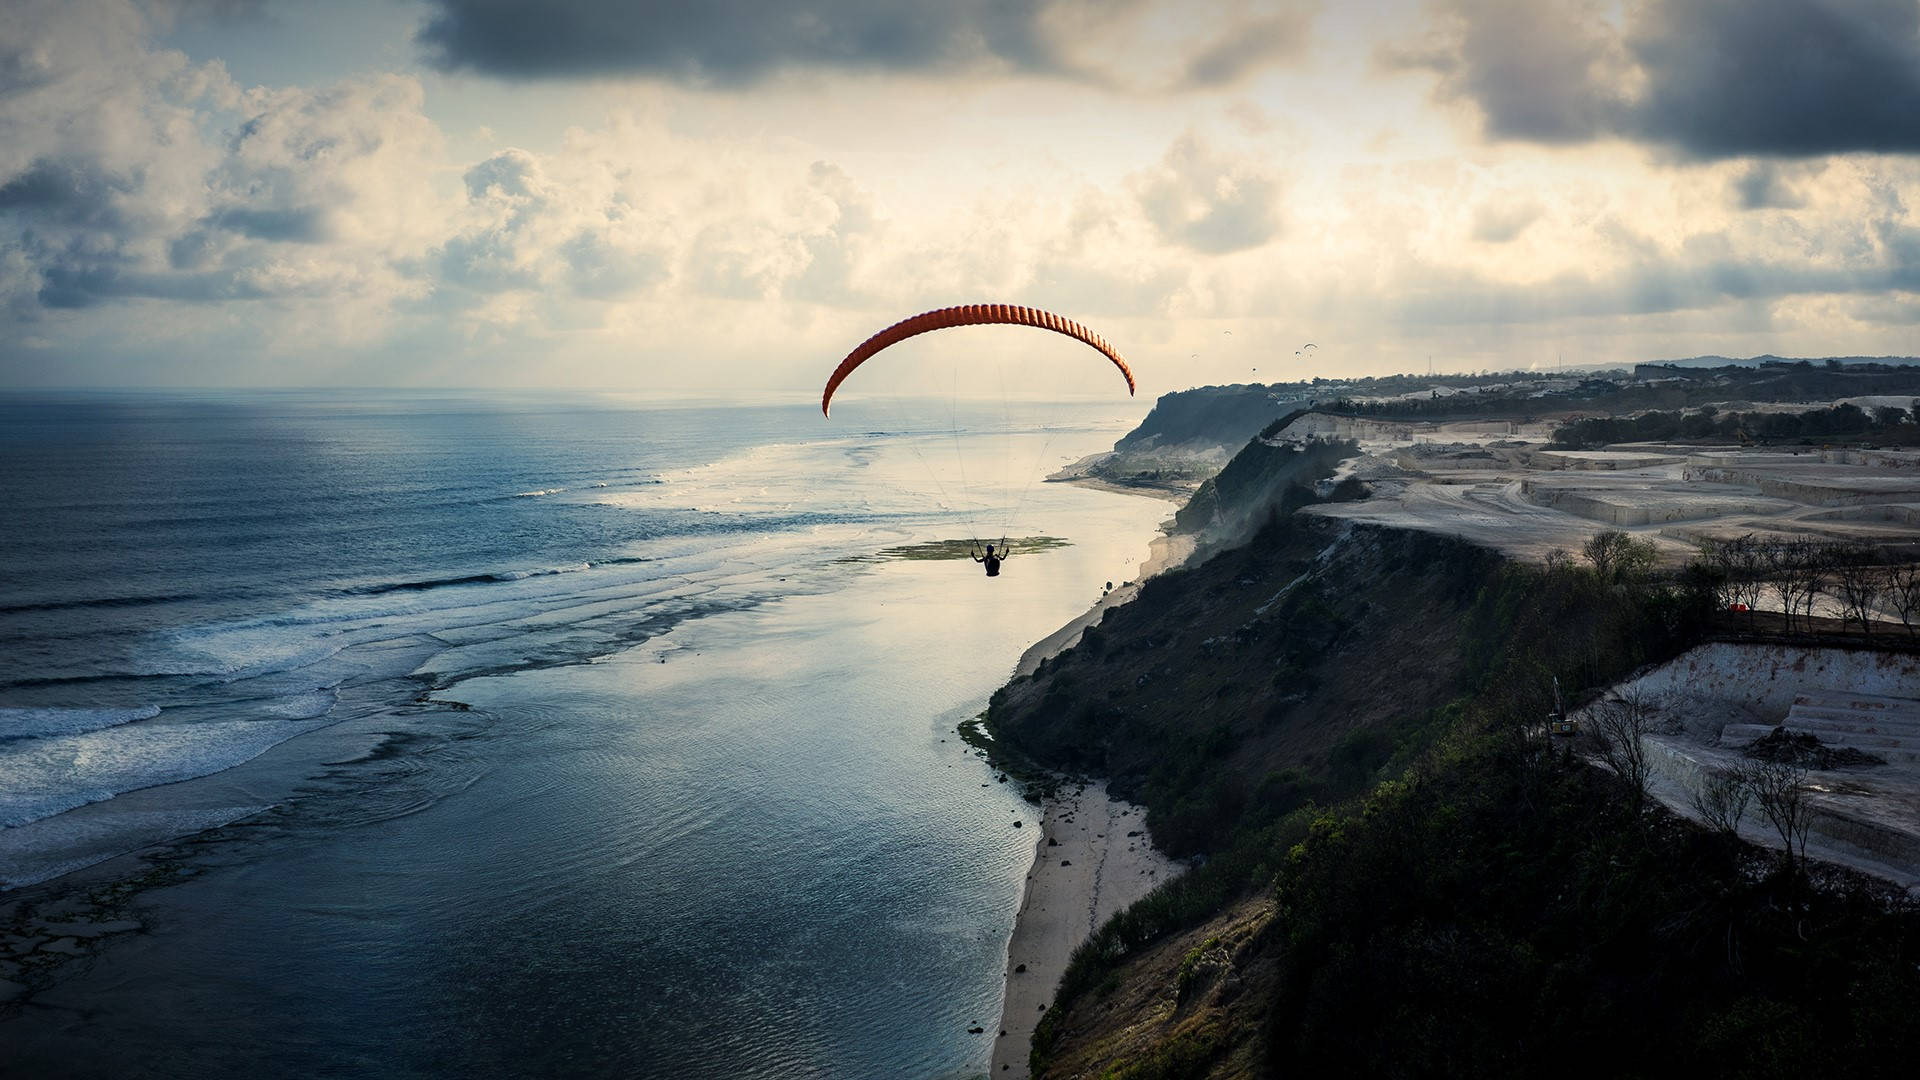 Paragliding Near A Cliffside Beach